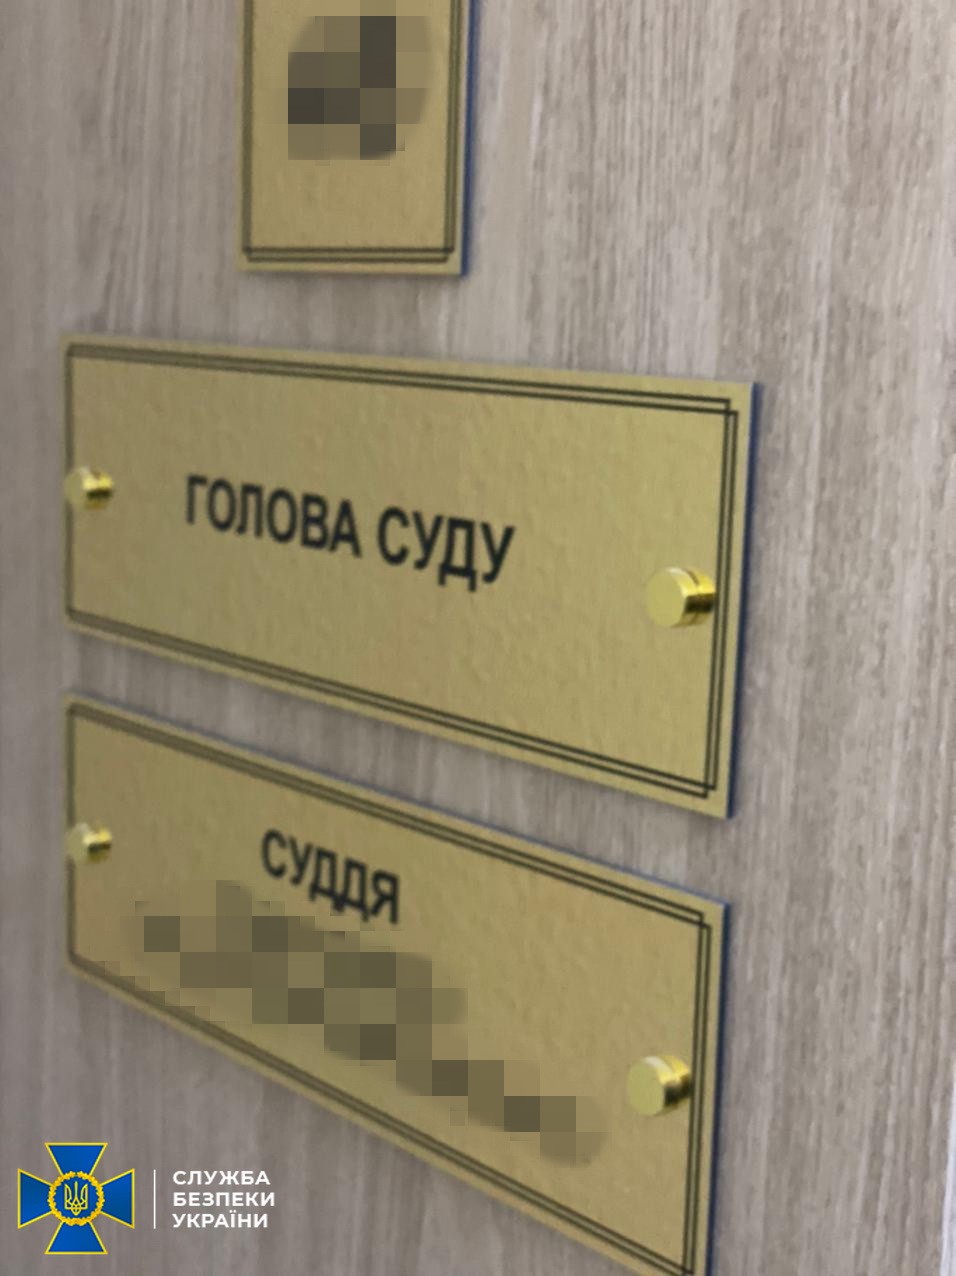 Председателя Харьковского административного суда поймали на взятке. Фото: СБУ